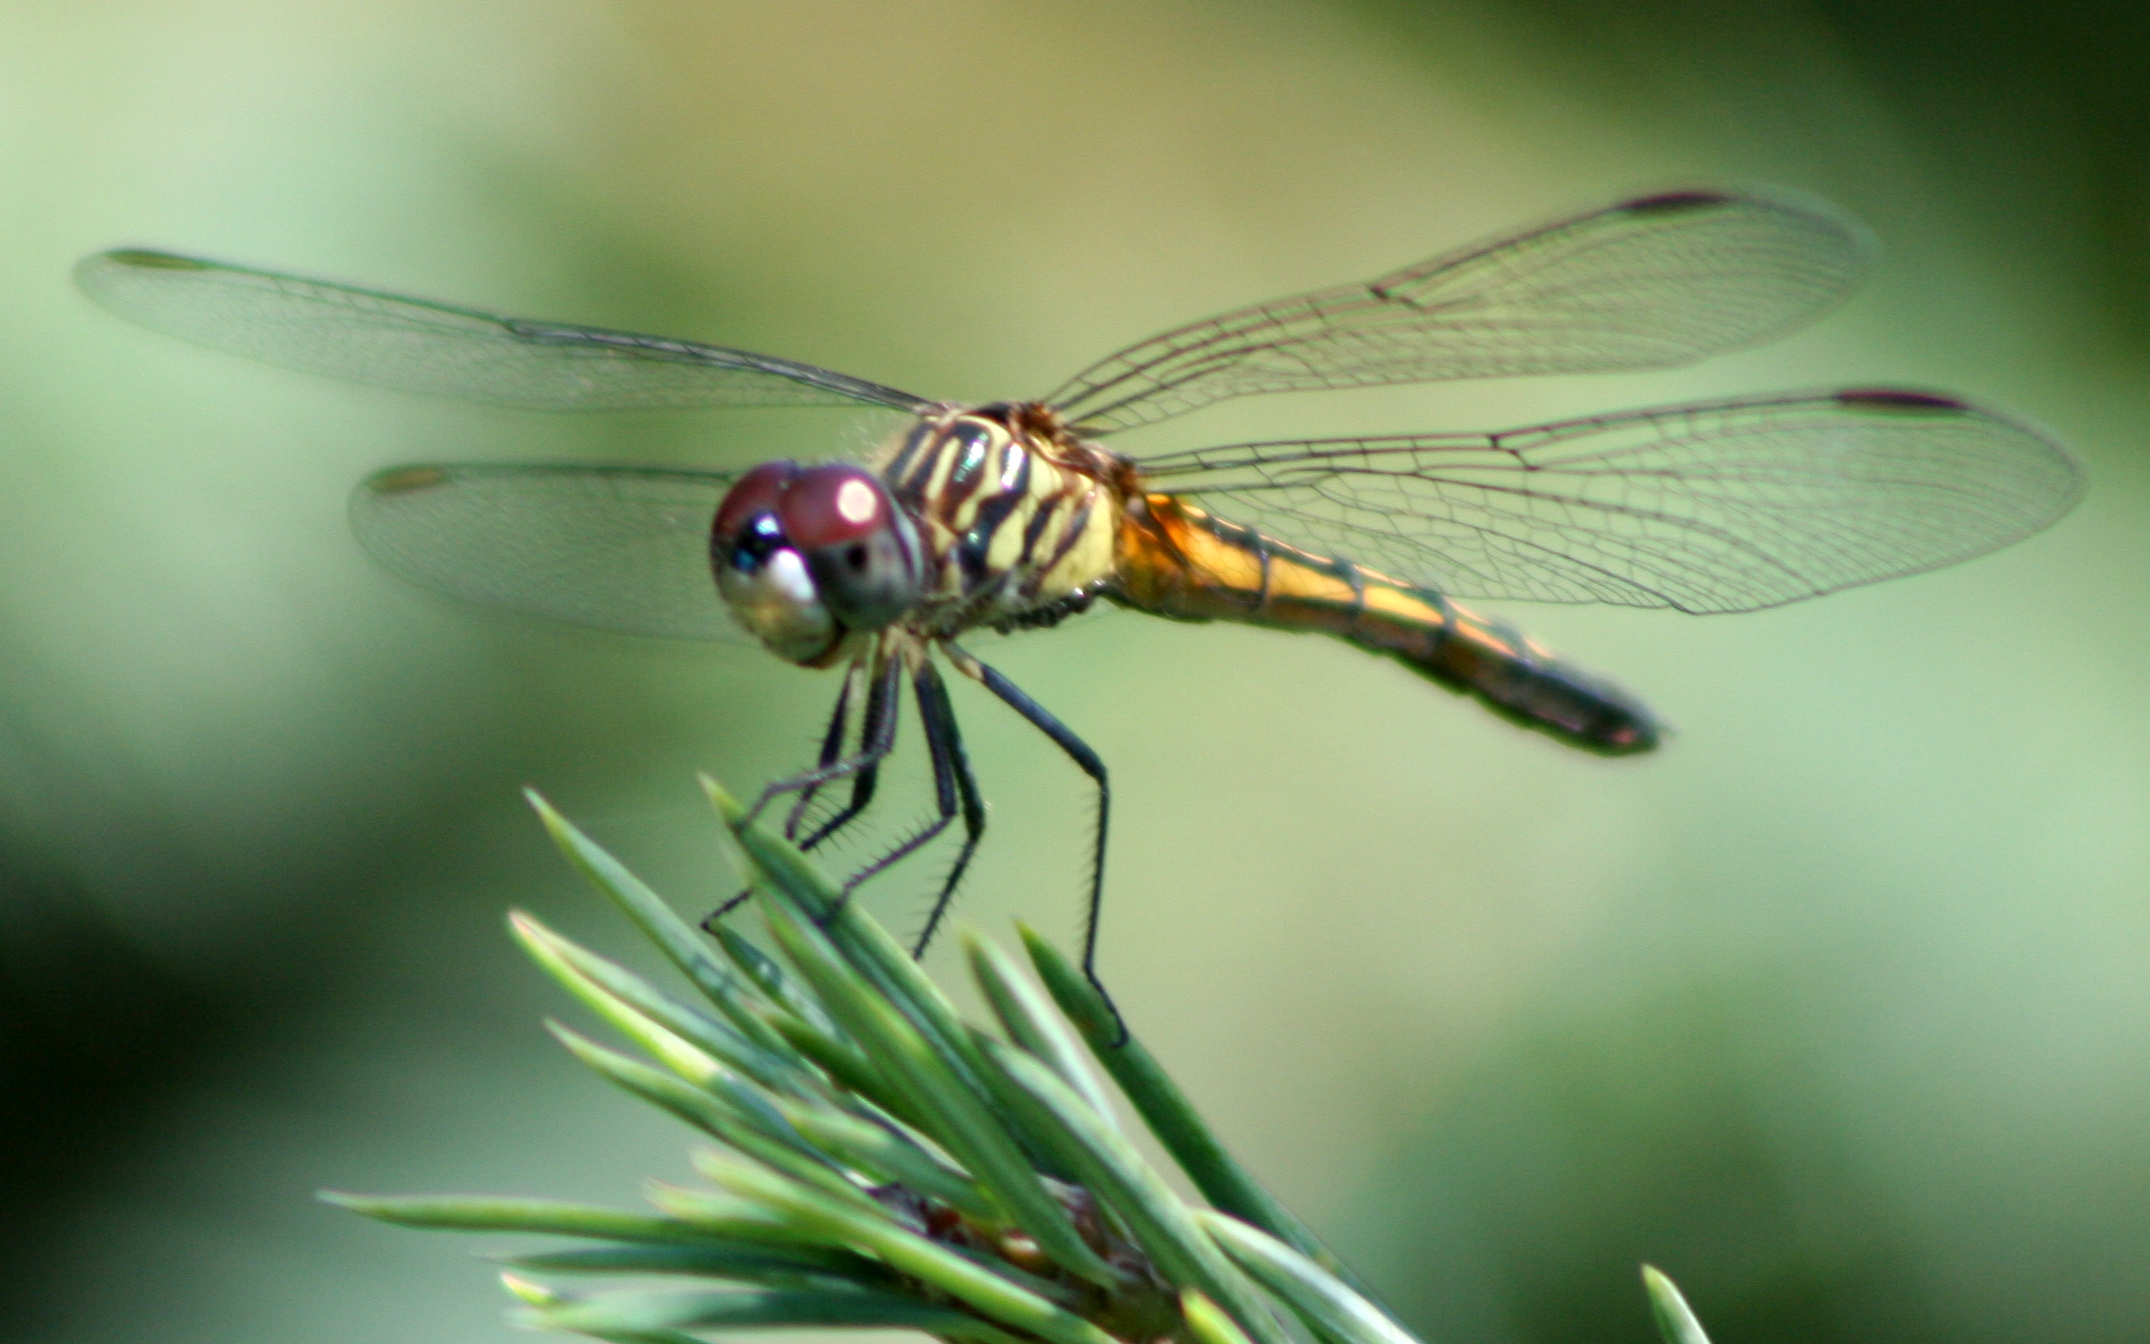 File:Dragonfly ran-387.jpg - Wikimedia Commons